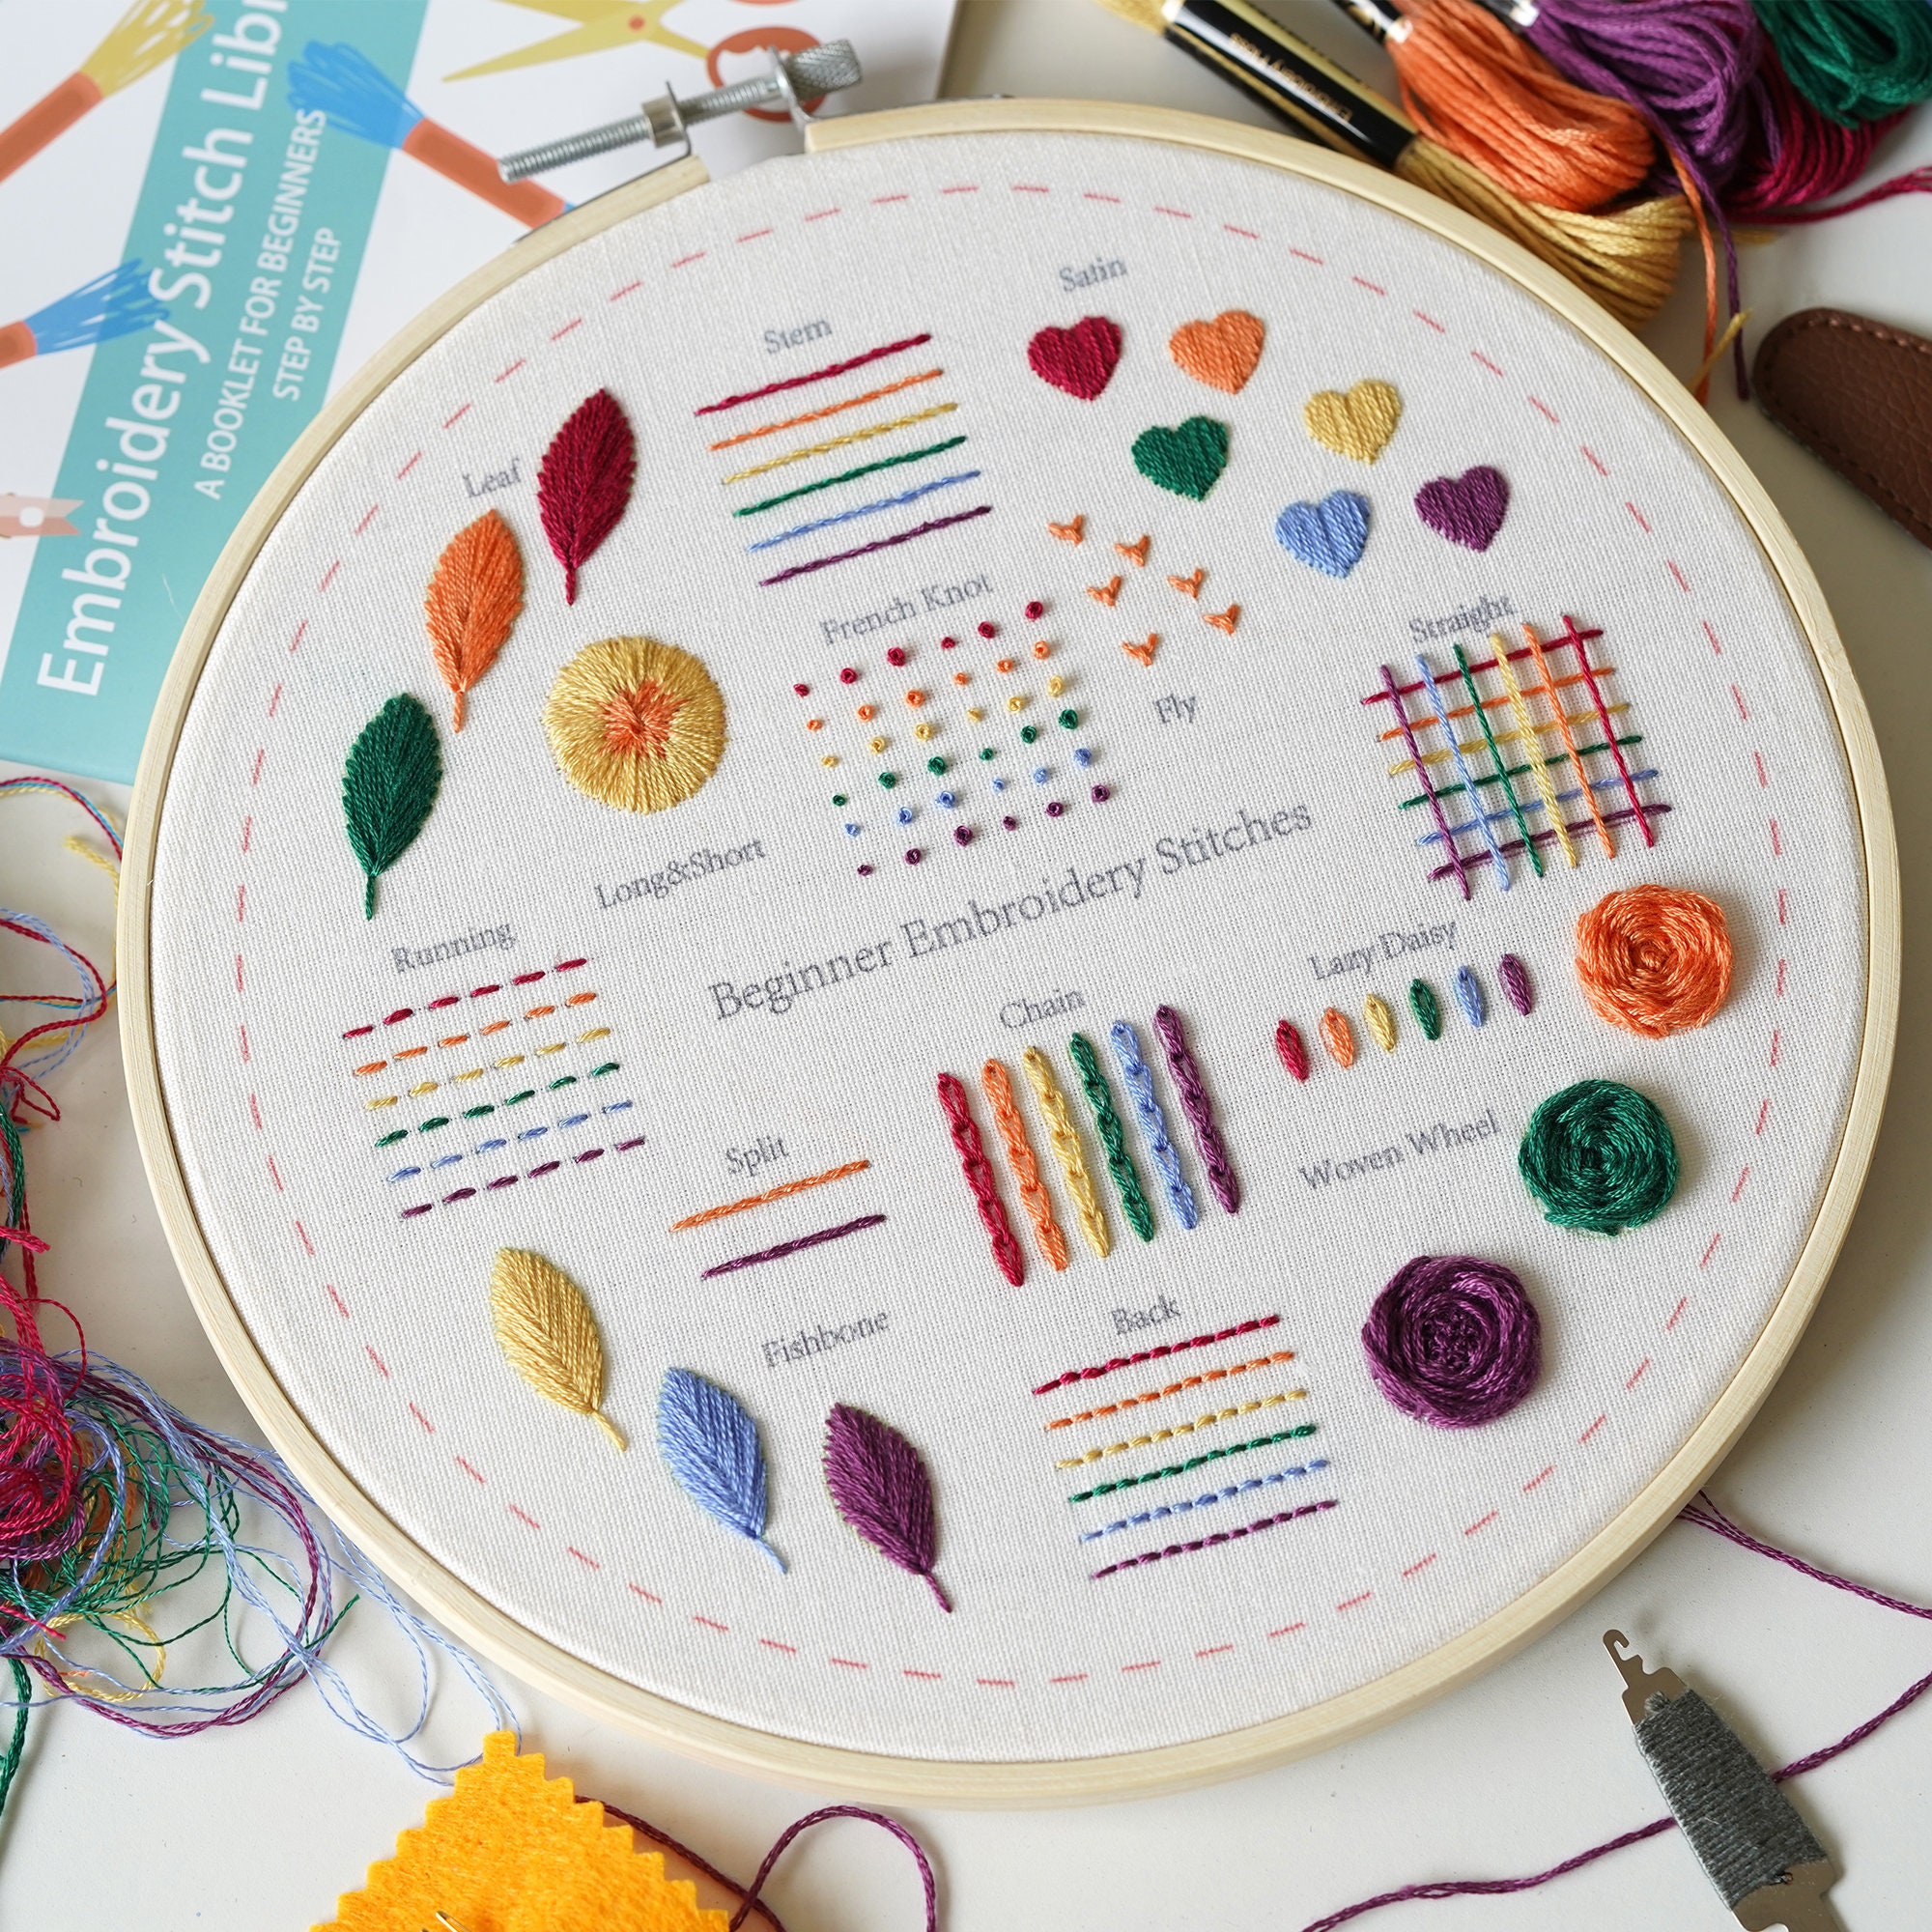  Gigicloud Embroidery Starter Kit, DIY Adult Beginner